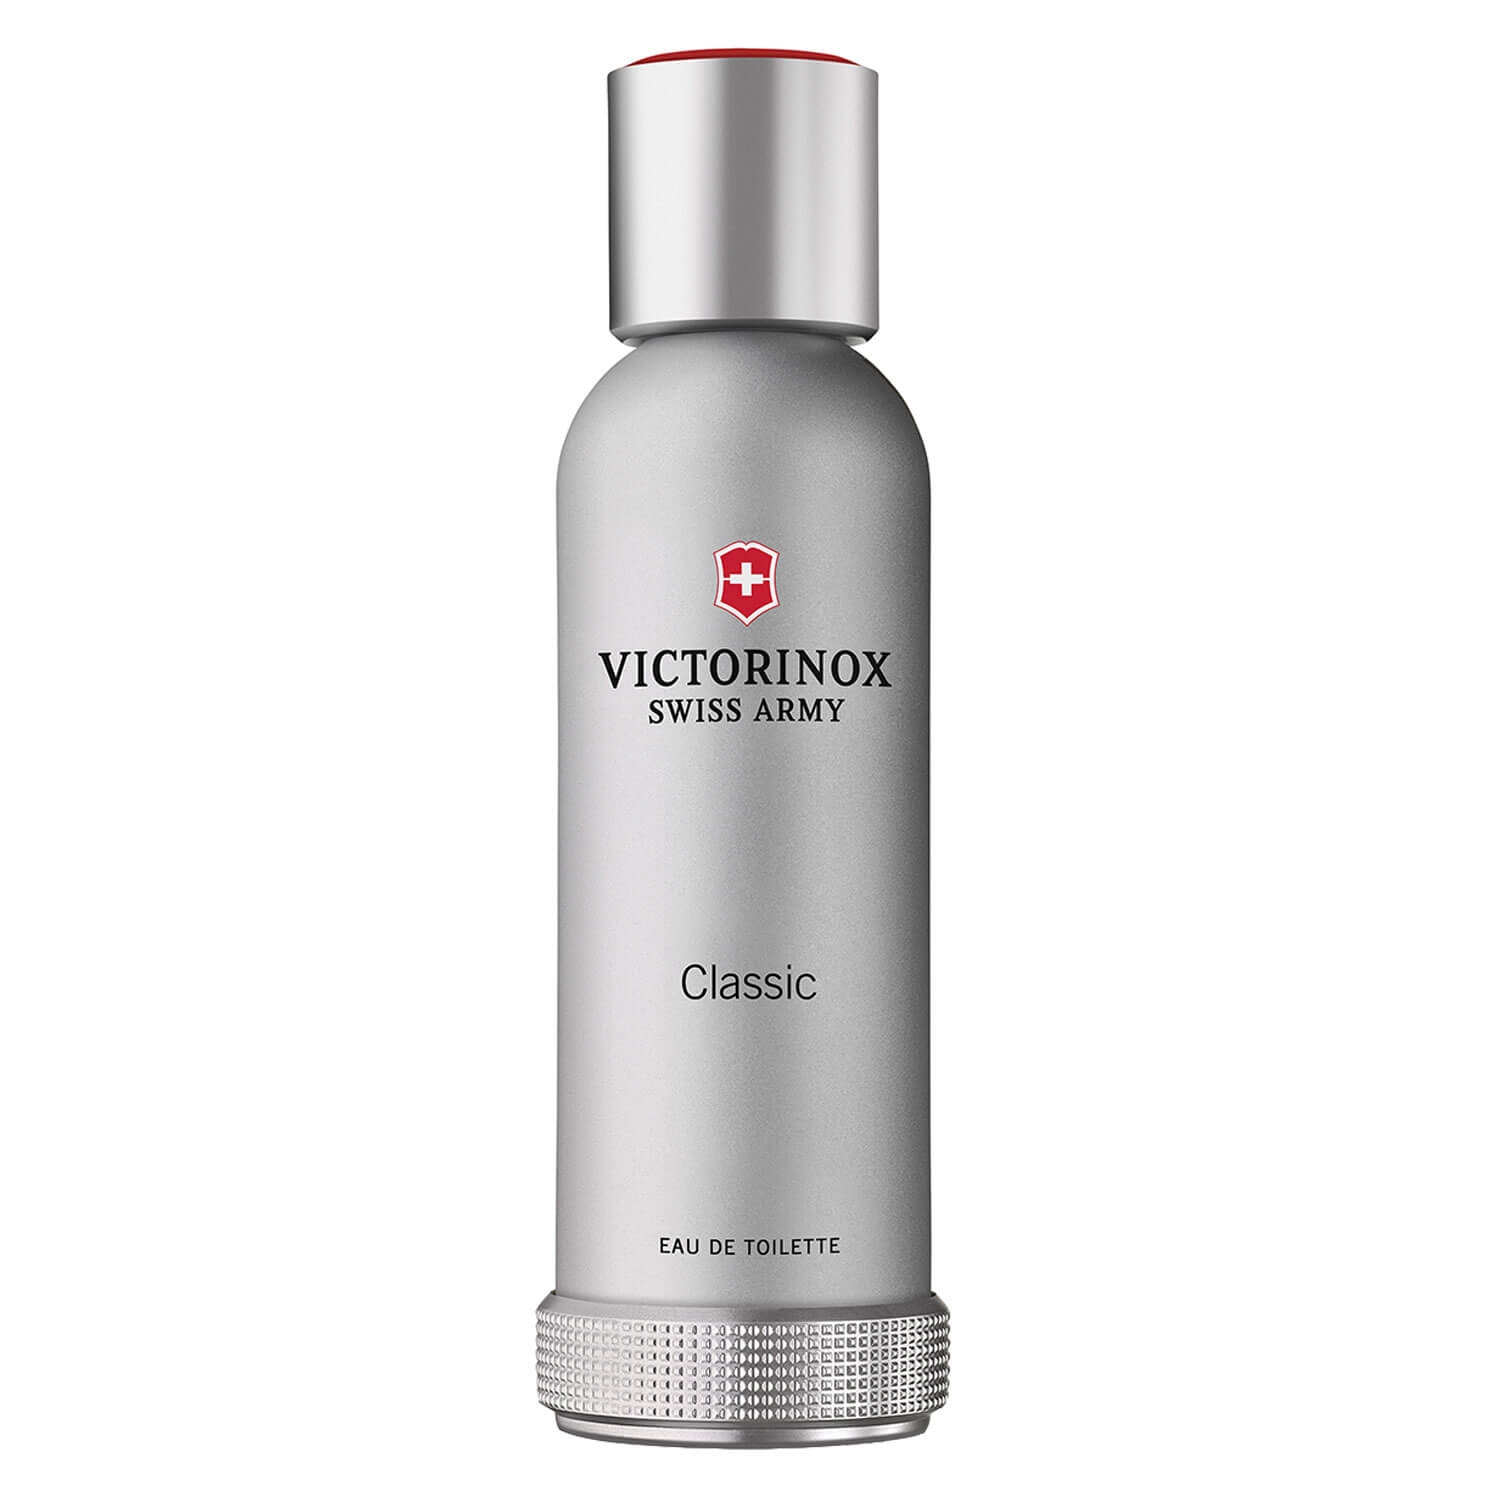 Produktbild von Victorinox Swiss Army - Classic Eau de Toilette